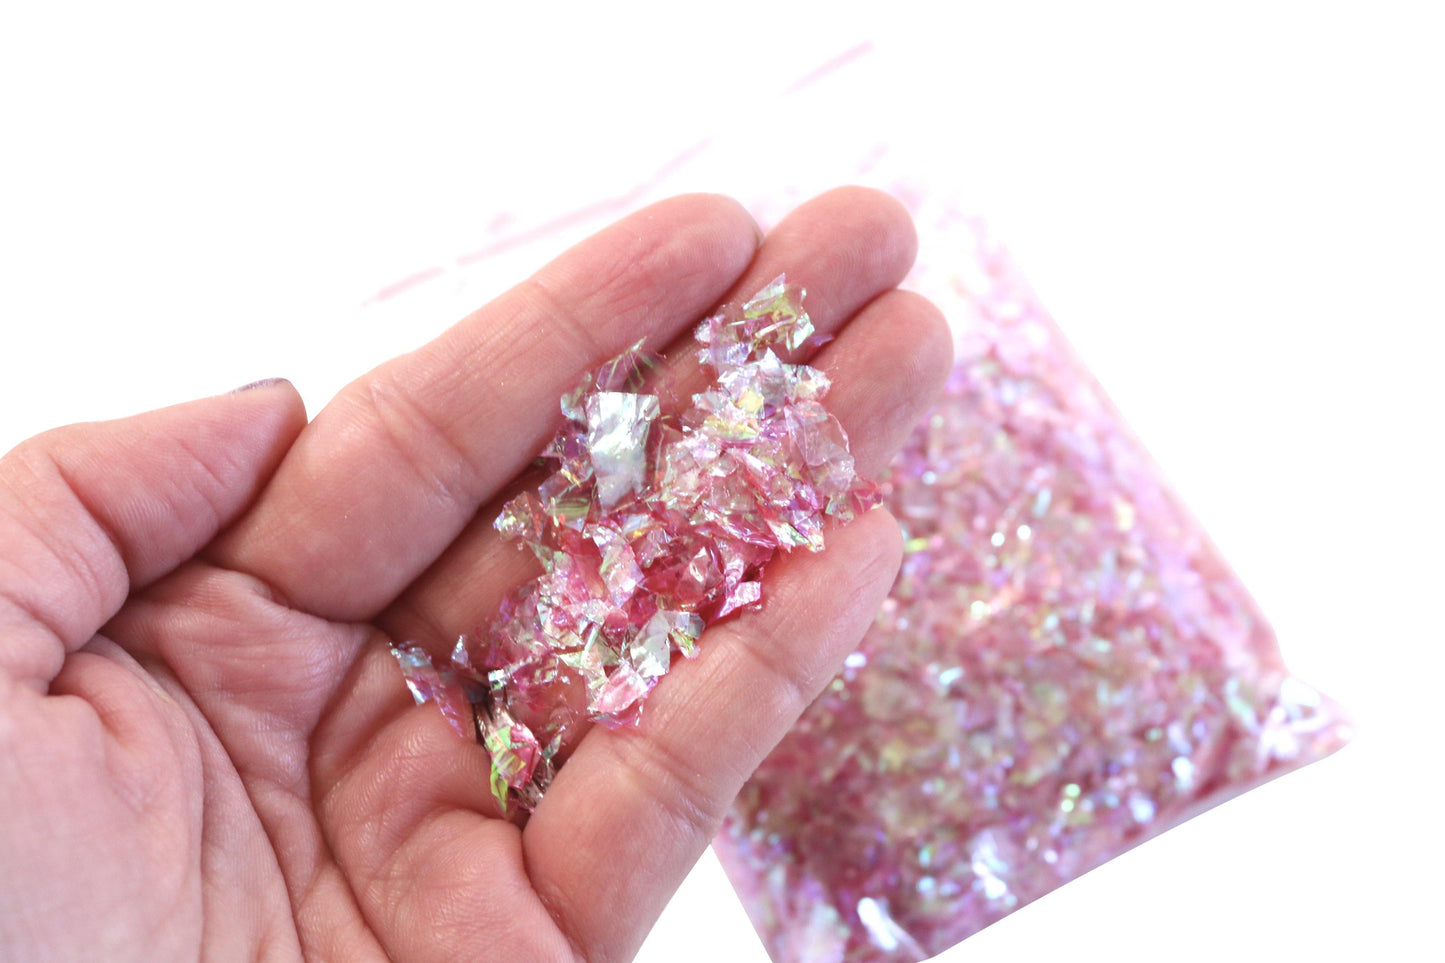 Raspberry Iridescent Flake Loose Glitter - Pretty in Pink Supply